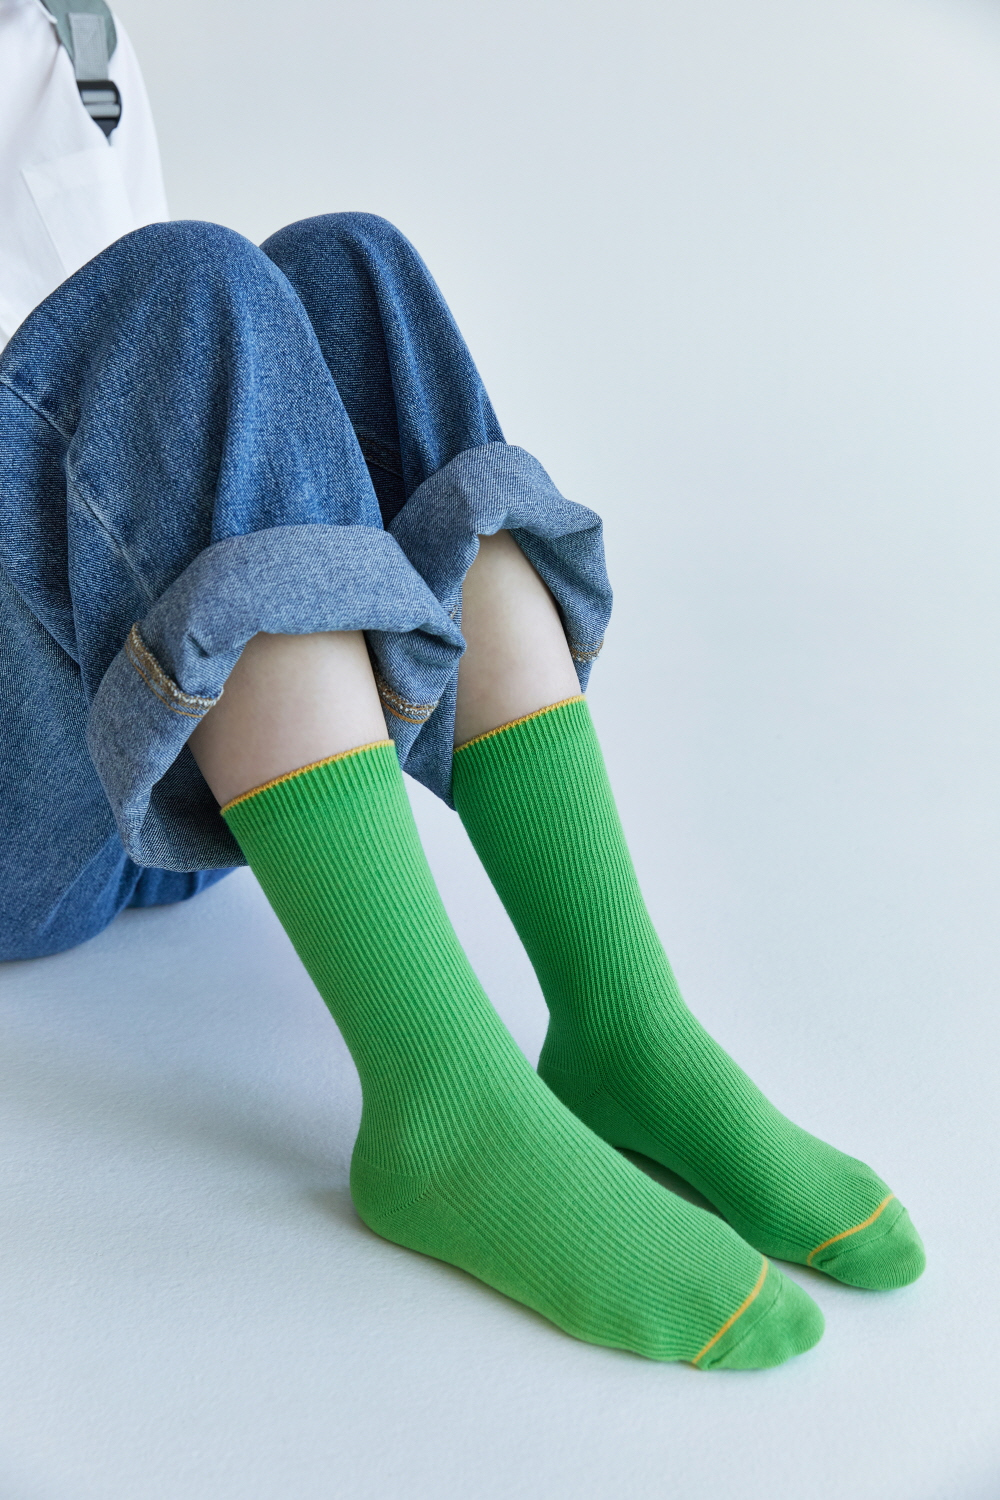 socks detail image-S1L49